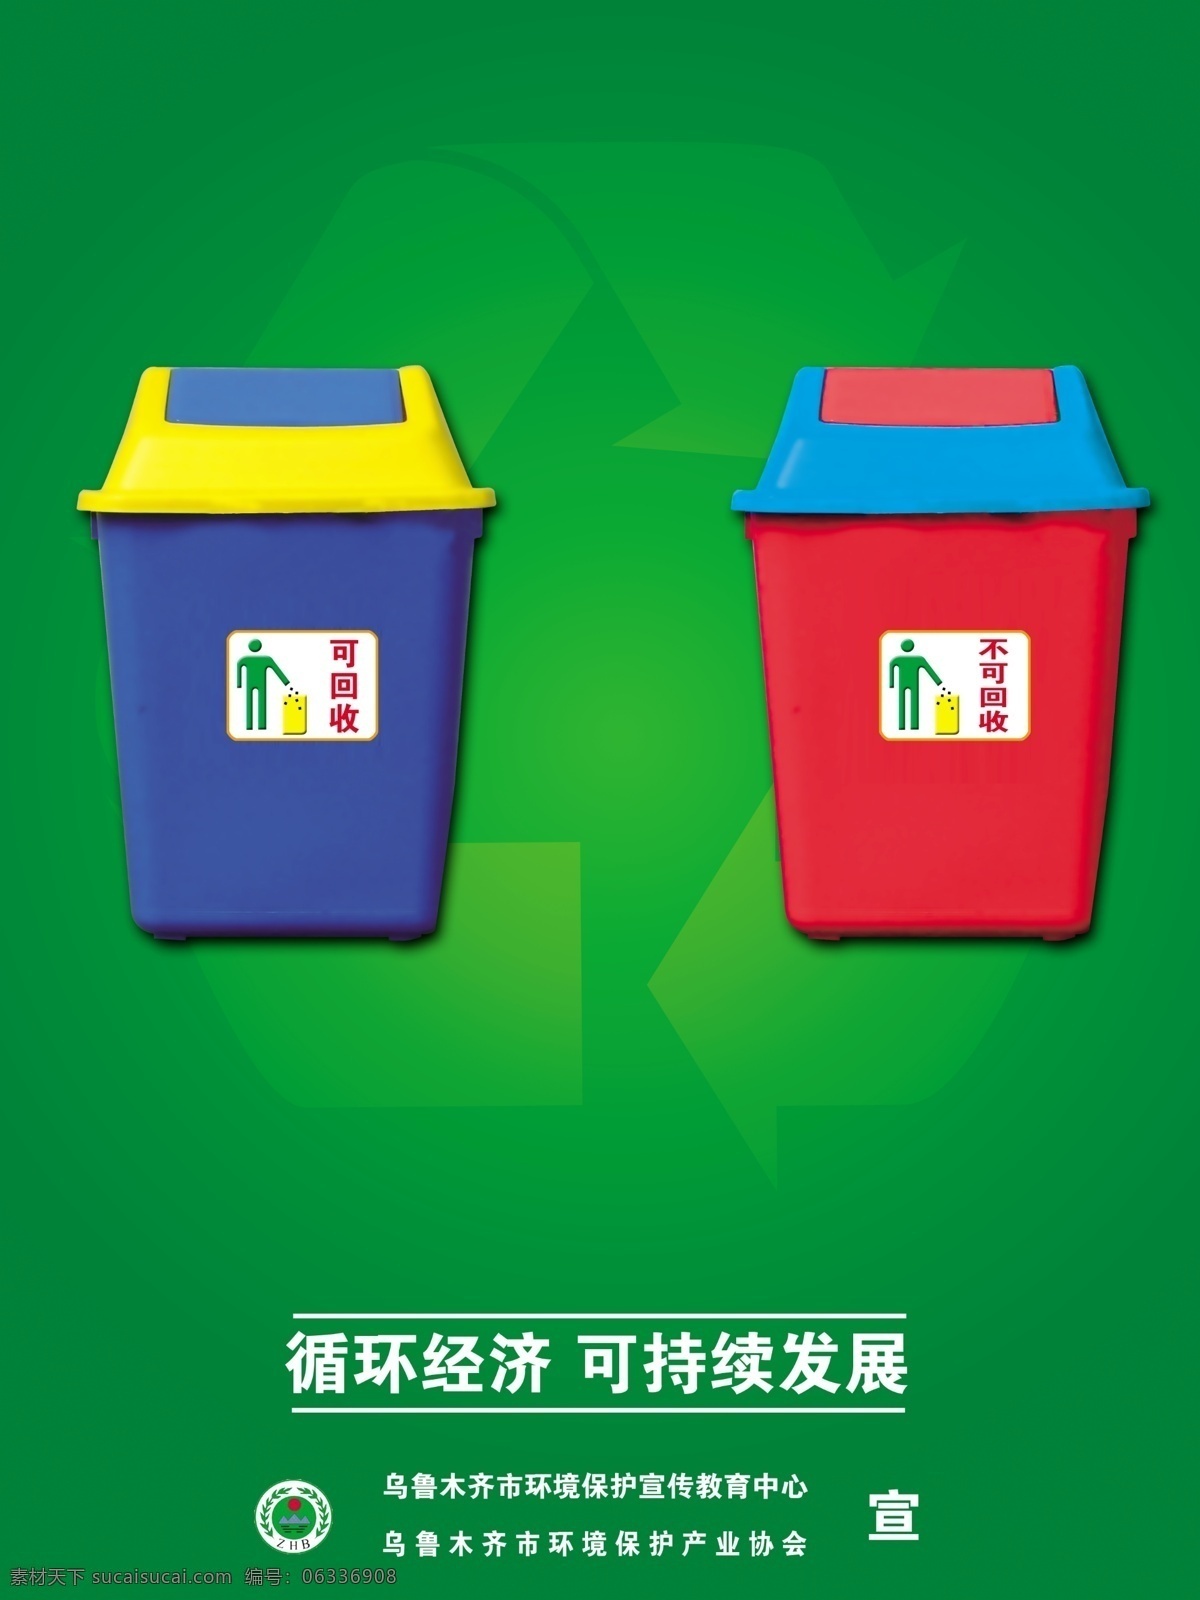 dm宣传单 保护环境 公益广告 广告设计模板 可回收 垃圾 垃圾箱 绿色 公益 广告 模板下载 再利用 循环 不可回收 循环经济 可持续发展 源文件 展板 公益展板设计